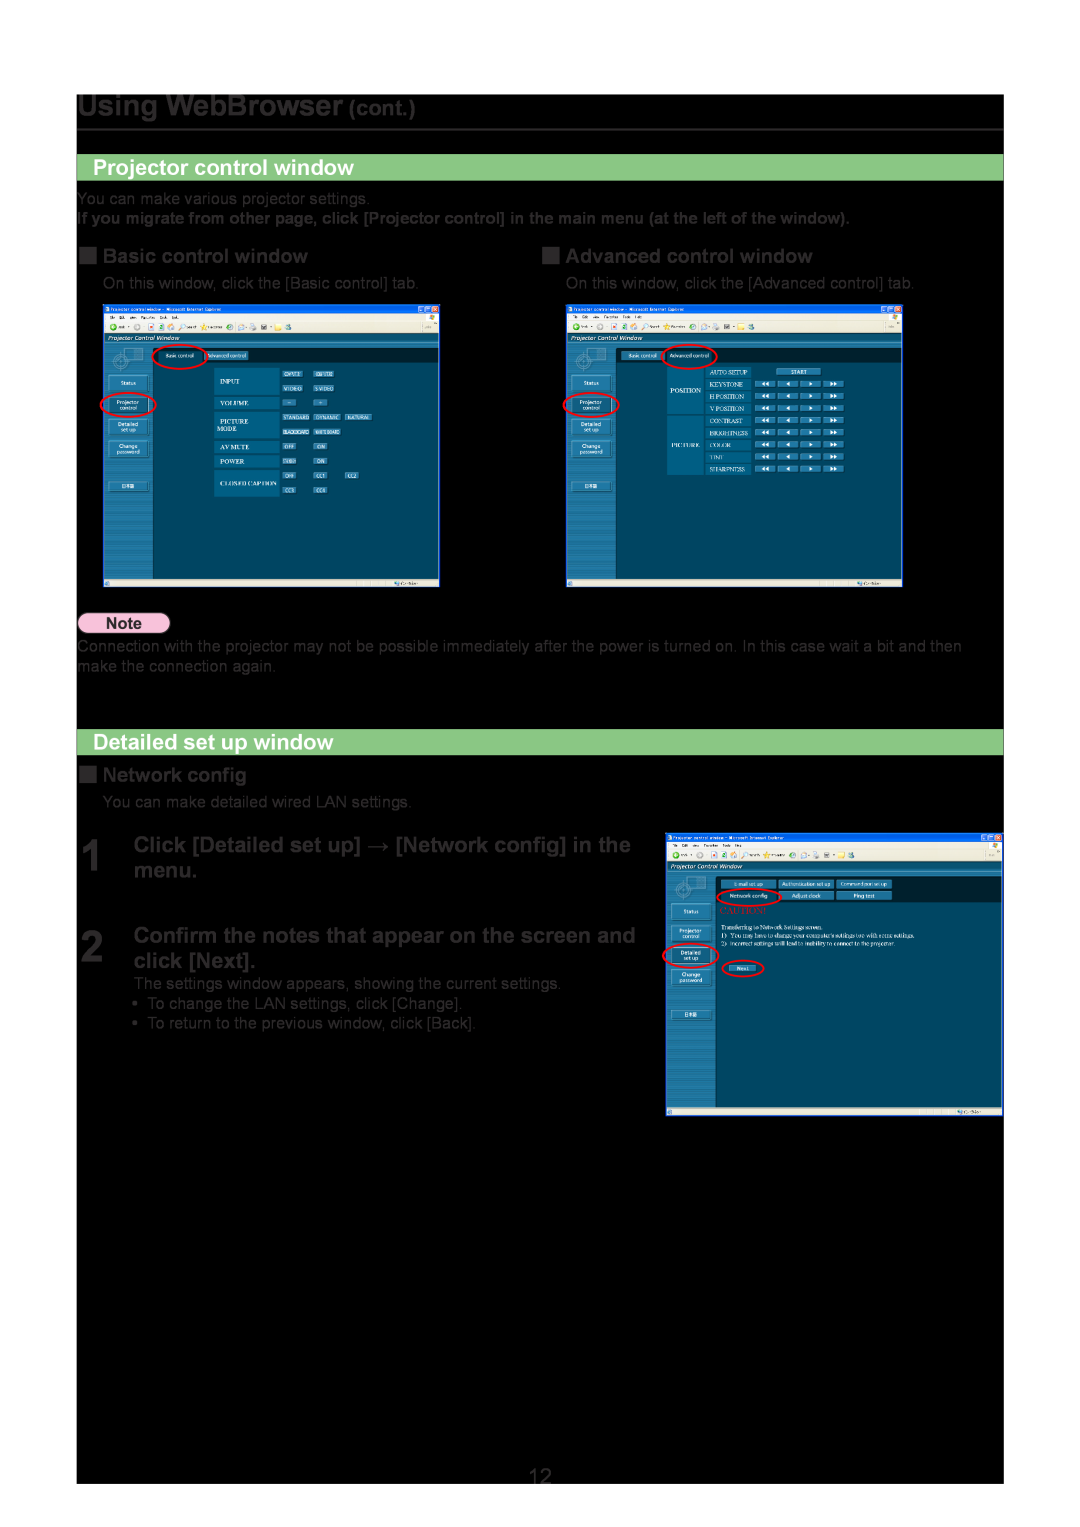 Panasonic LB1U Using WebBrowser cont, Projector control window, Detailed set up window, menu, click Next, „„Network config 